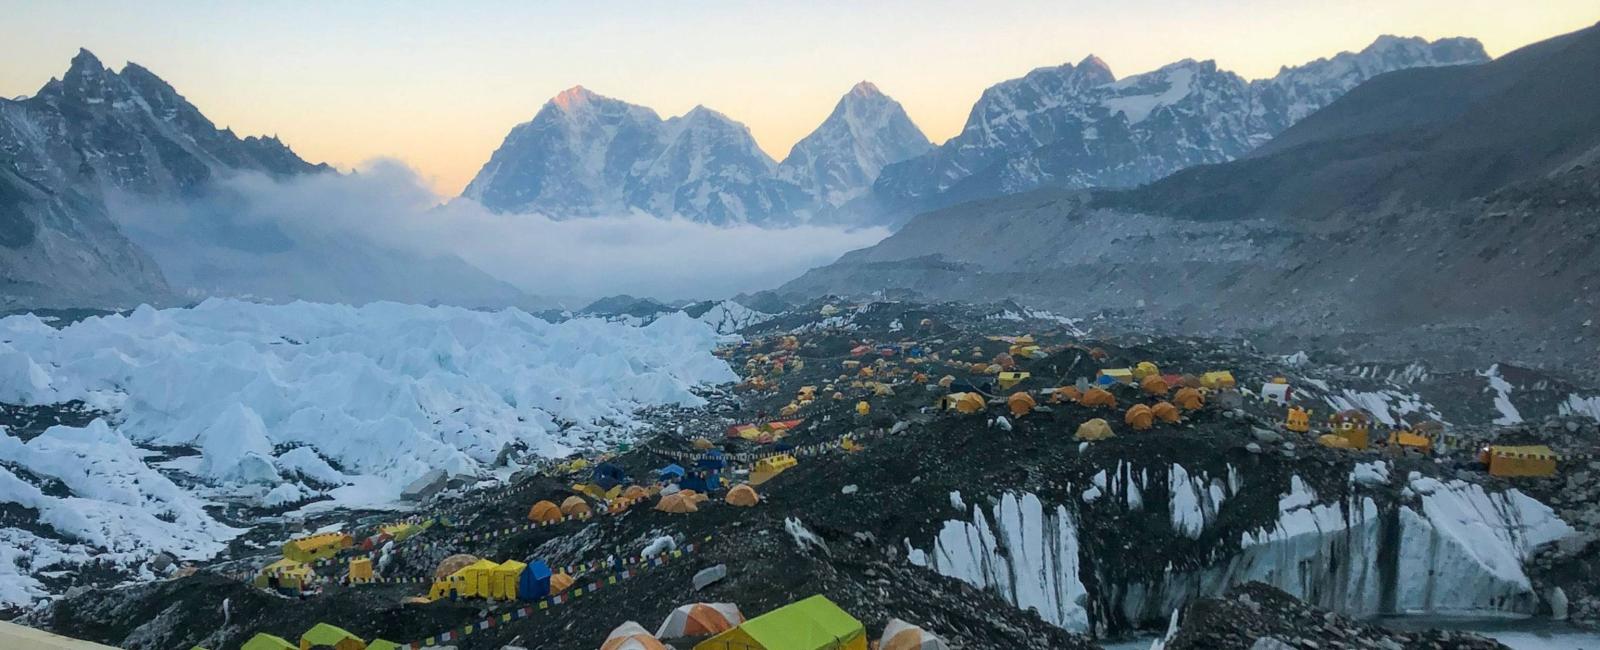 Everest Base camp Trek